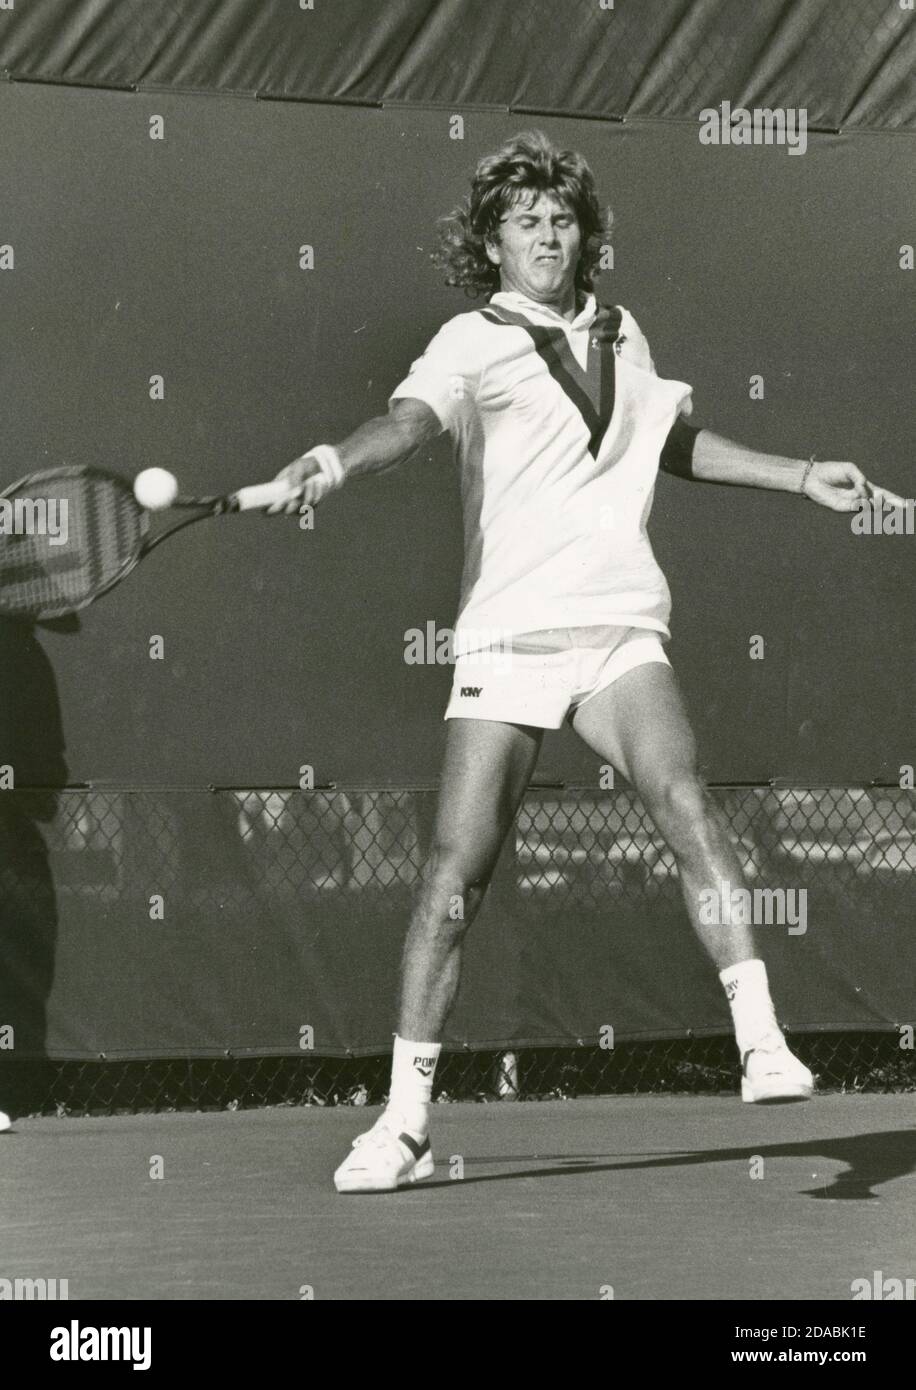 Swedish tennis player Peter Lundgren, 1980s Stock Photo - Alamy